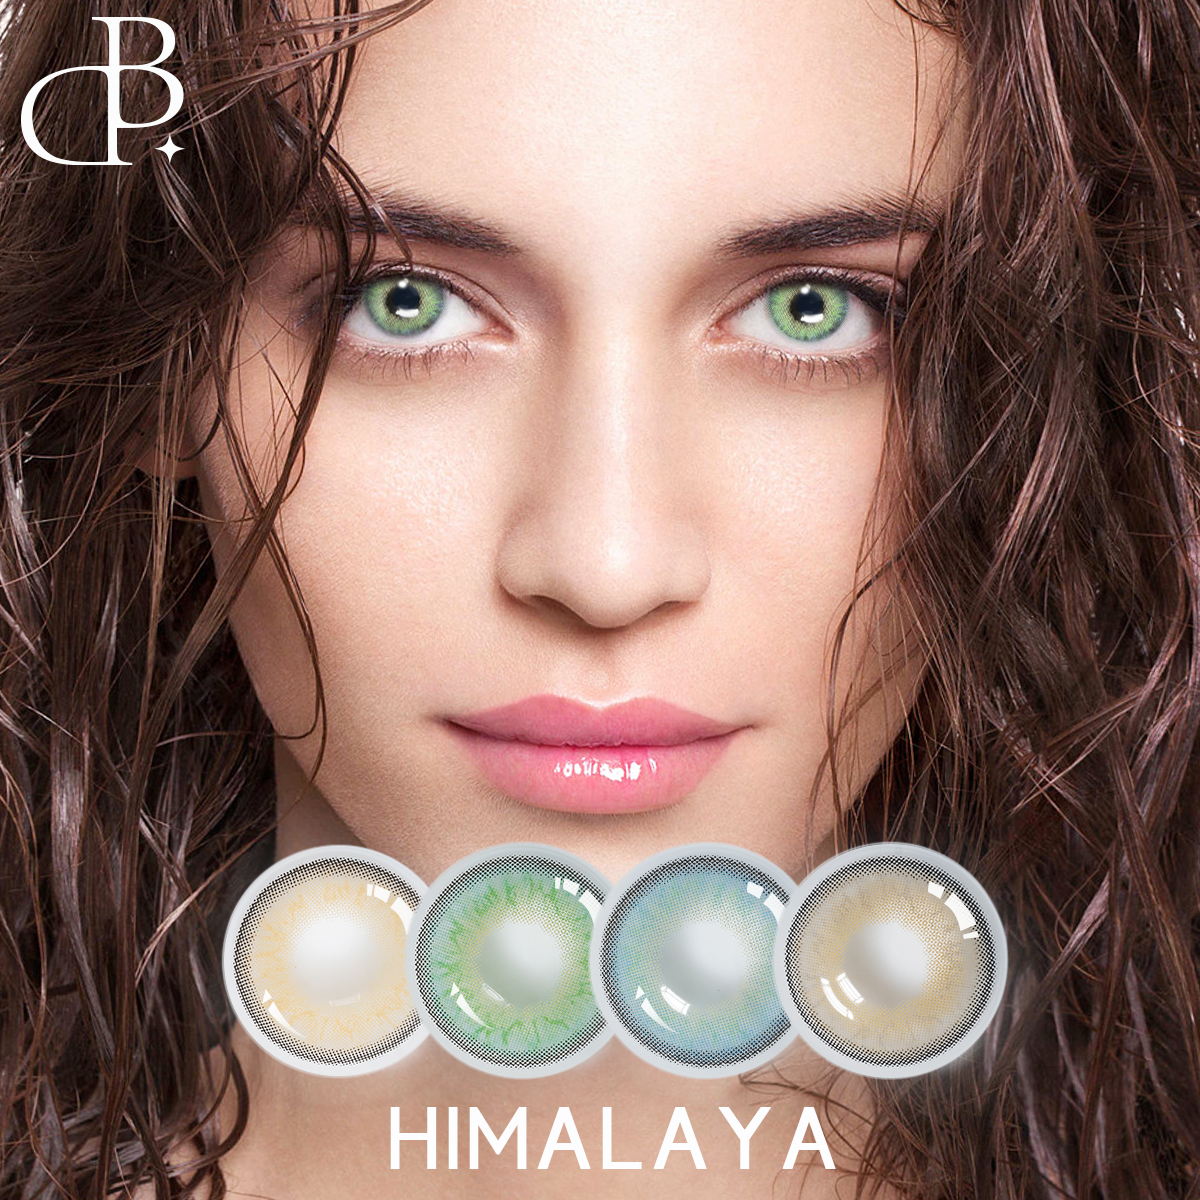 HIMALAYA Oem Private Label Fresh Looking Color Eye Contact Lenses For Cosmetic дешеві кольорові контактні лінзи за рецептом